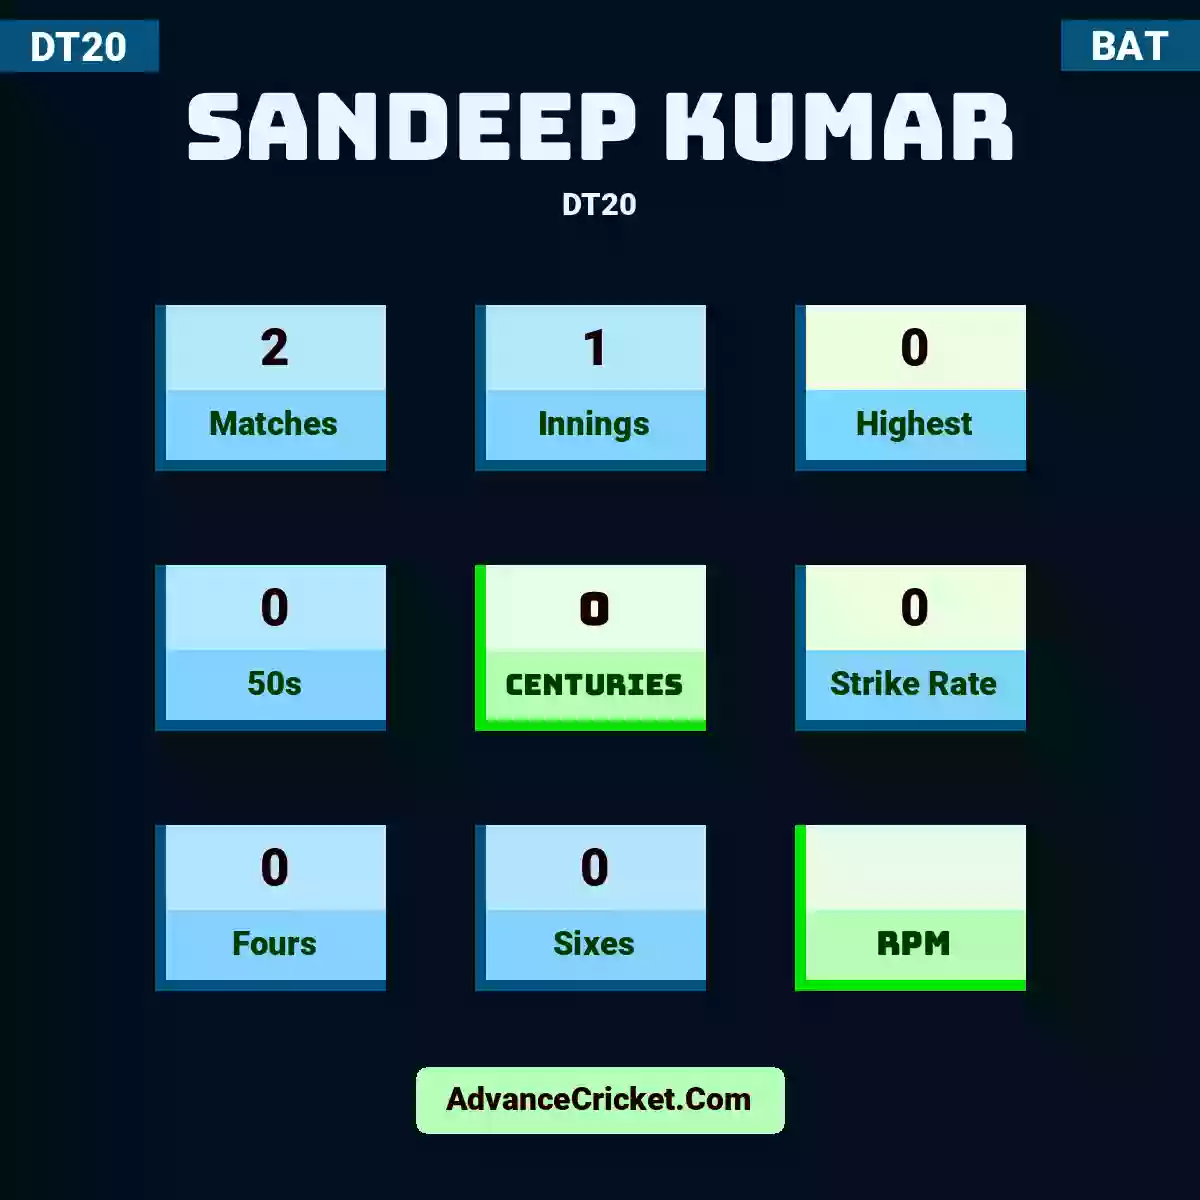 Sandeep Kumar DT20 , Sandeep Kumar played 2 matches, scored 0 runs as highest, 0 half-centuries, and 0 centuries, with a strike rate of 0. S.Kumar hit 0 fours and 0 sixes.